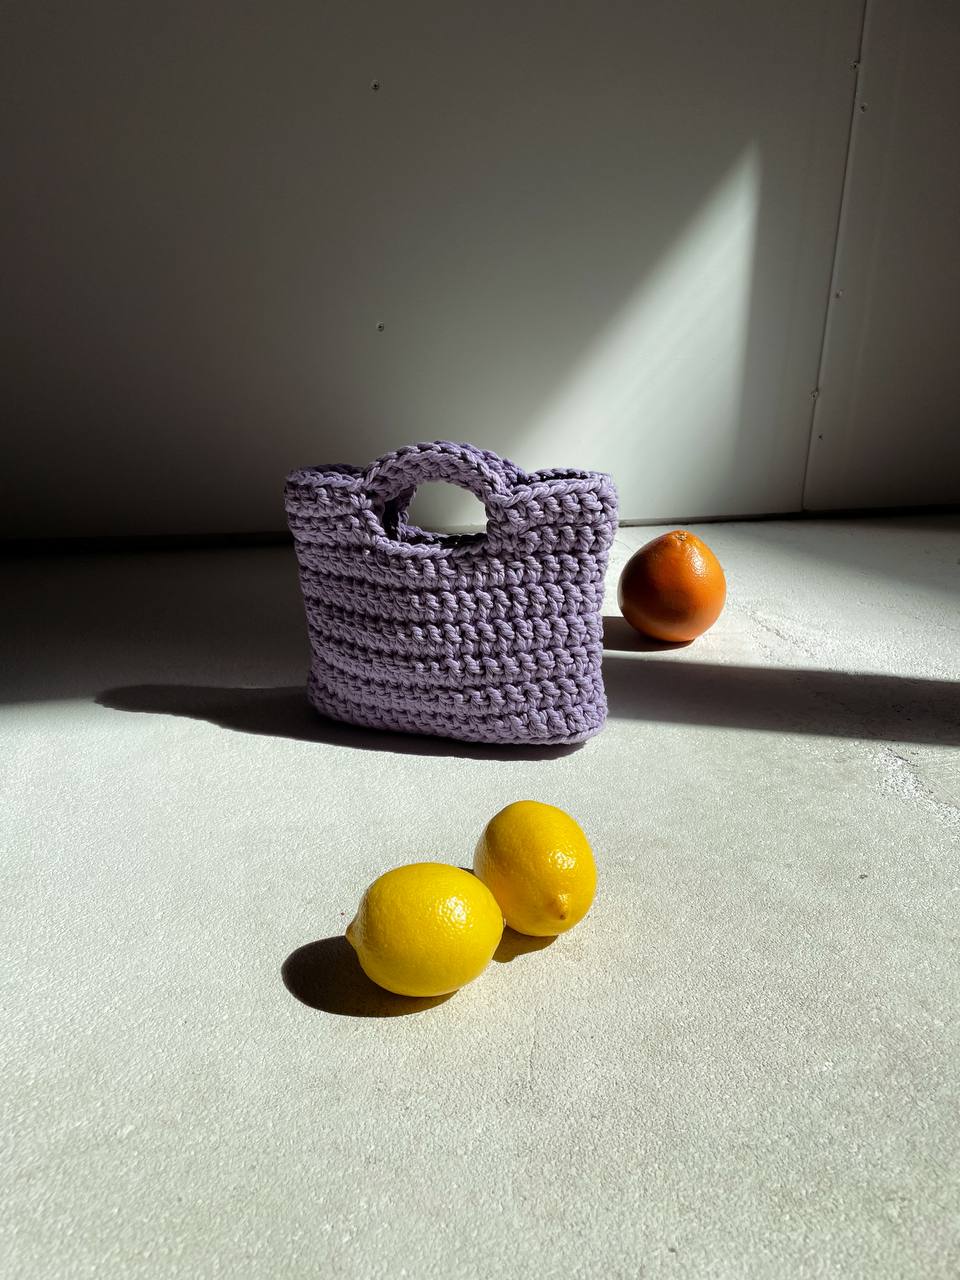 Lavendel gestrickte Handtasche